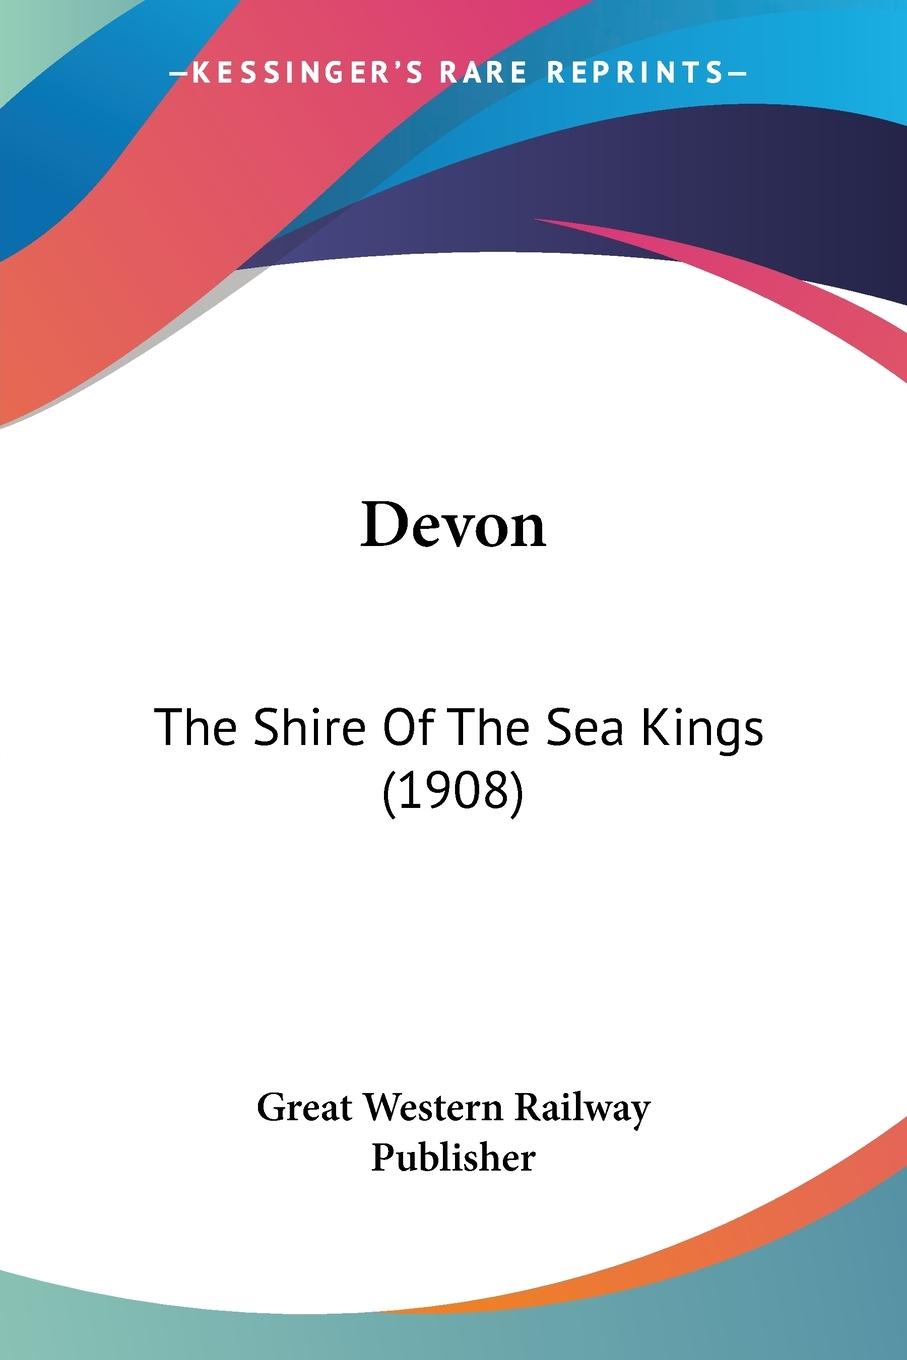 Devon - Great Western Railway Publisher